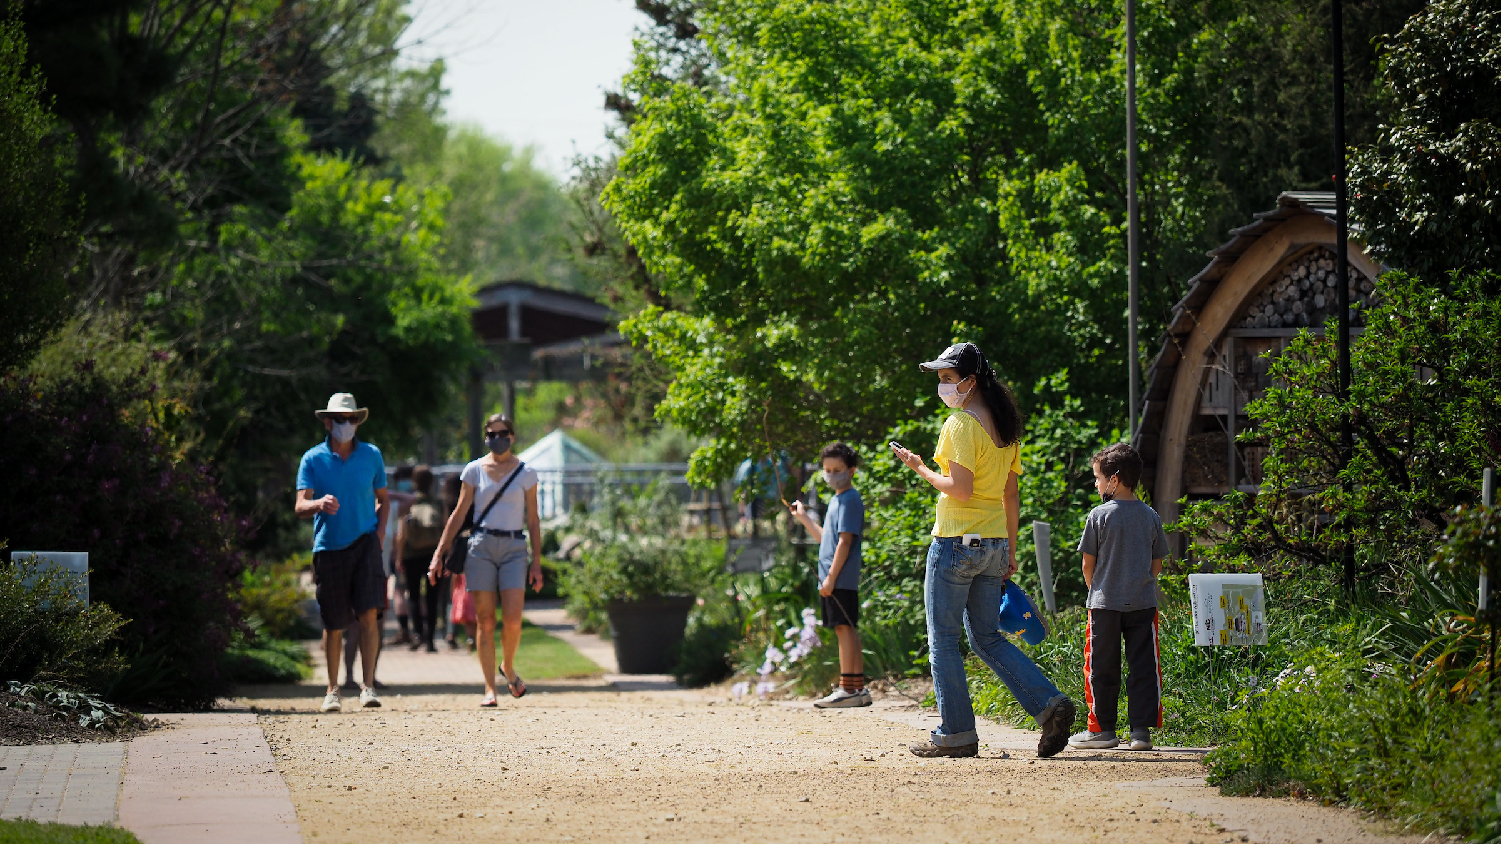 Guests walking at JC Raulston Arboretum.